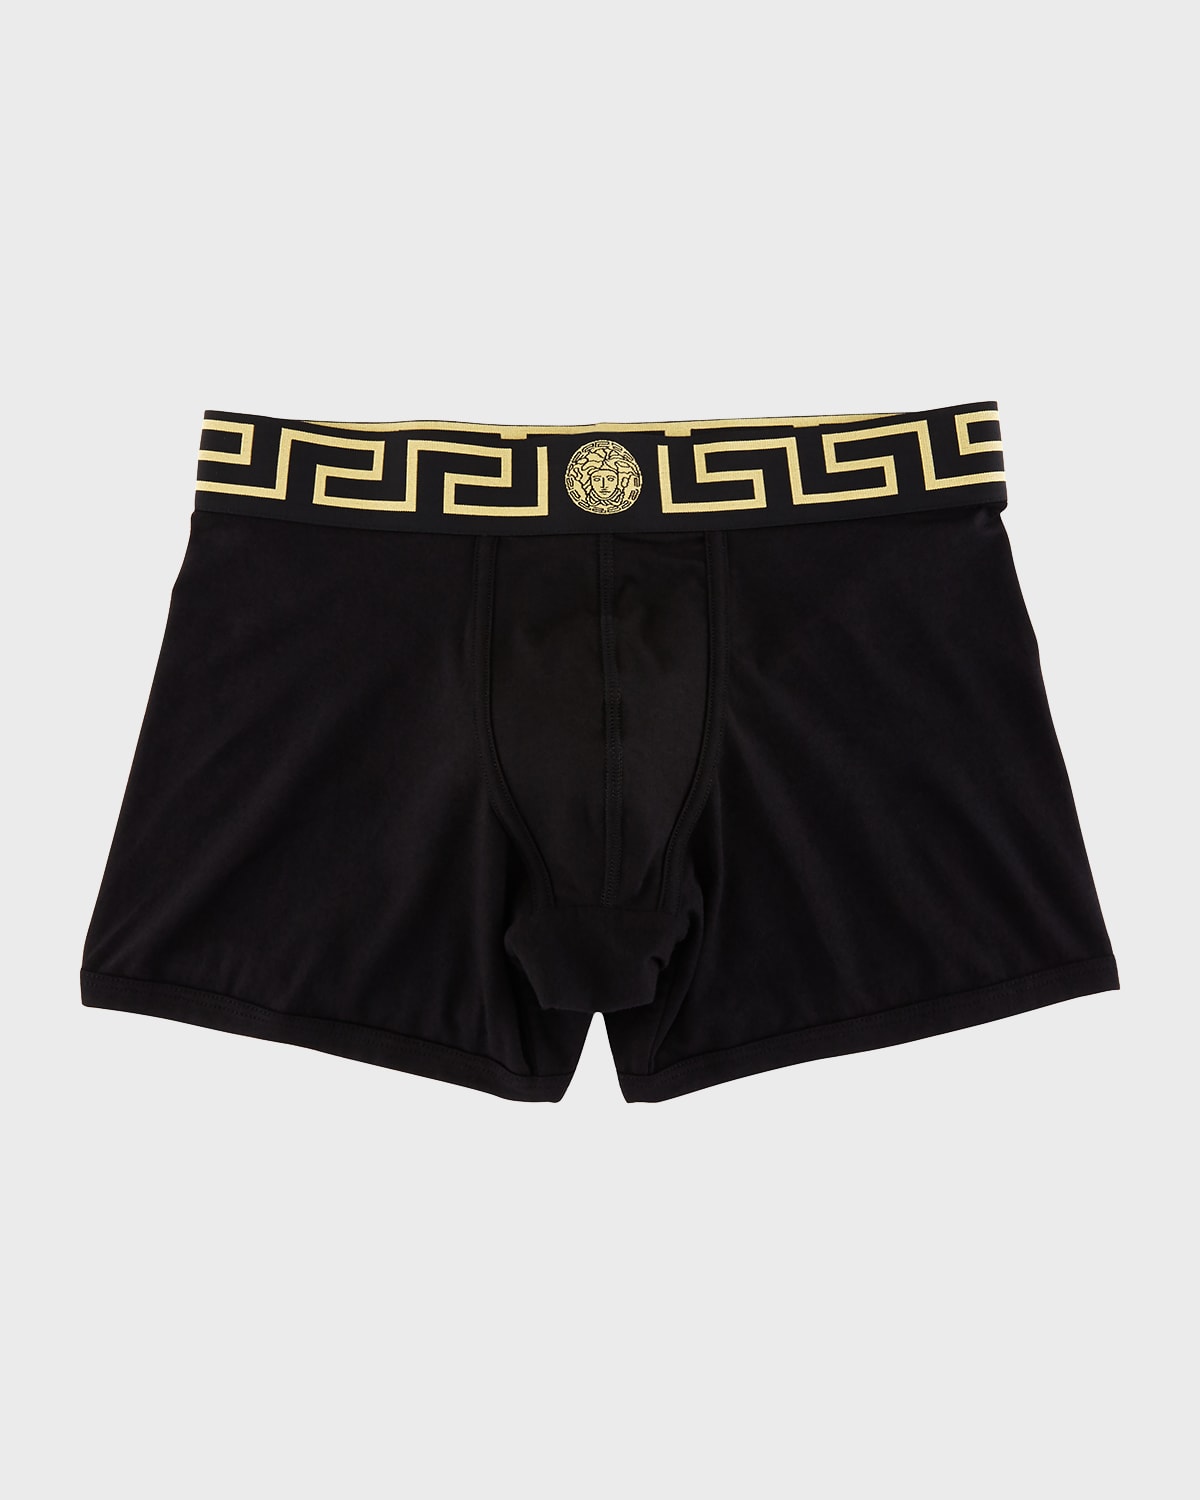 Versace Greca Border Long Boxer Trunks In Black/gold